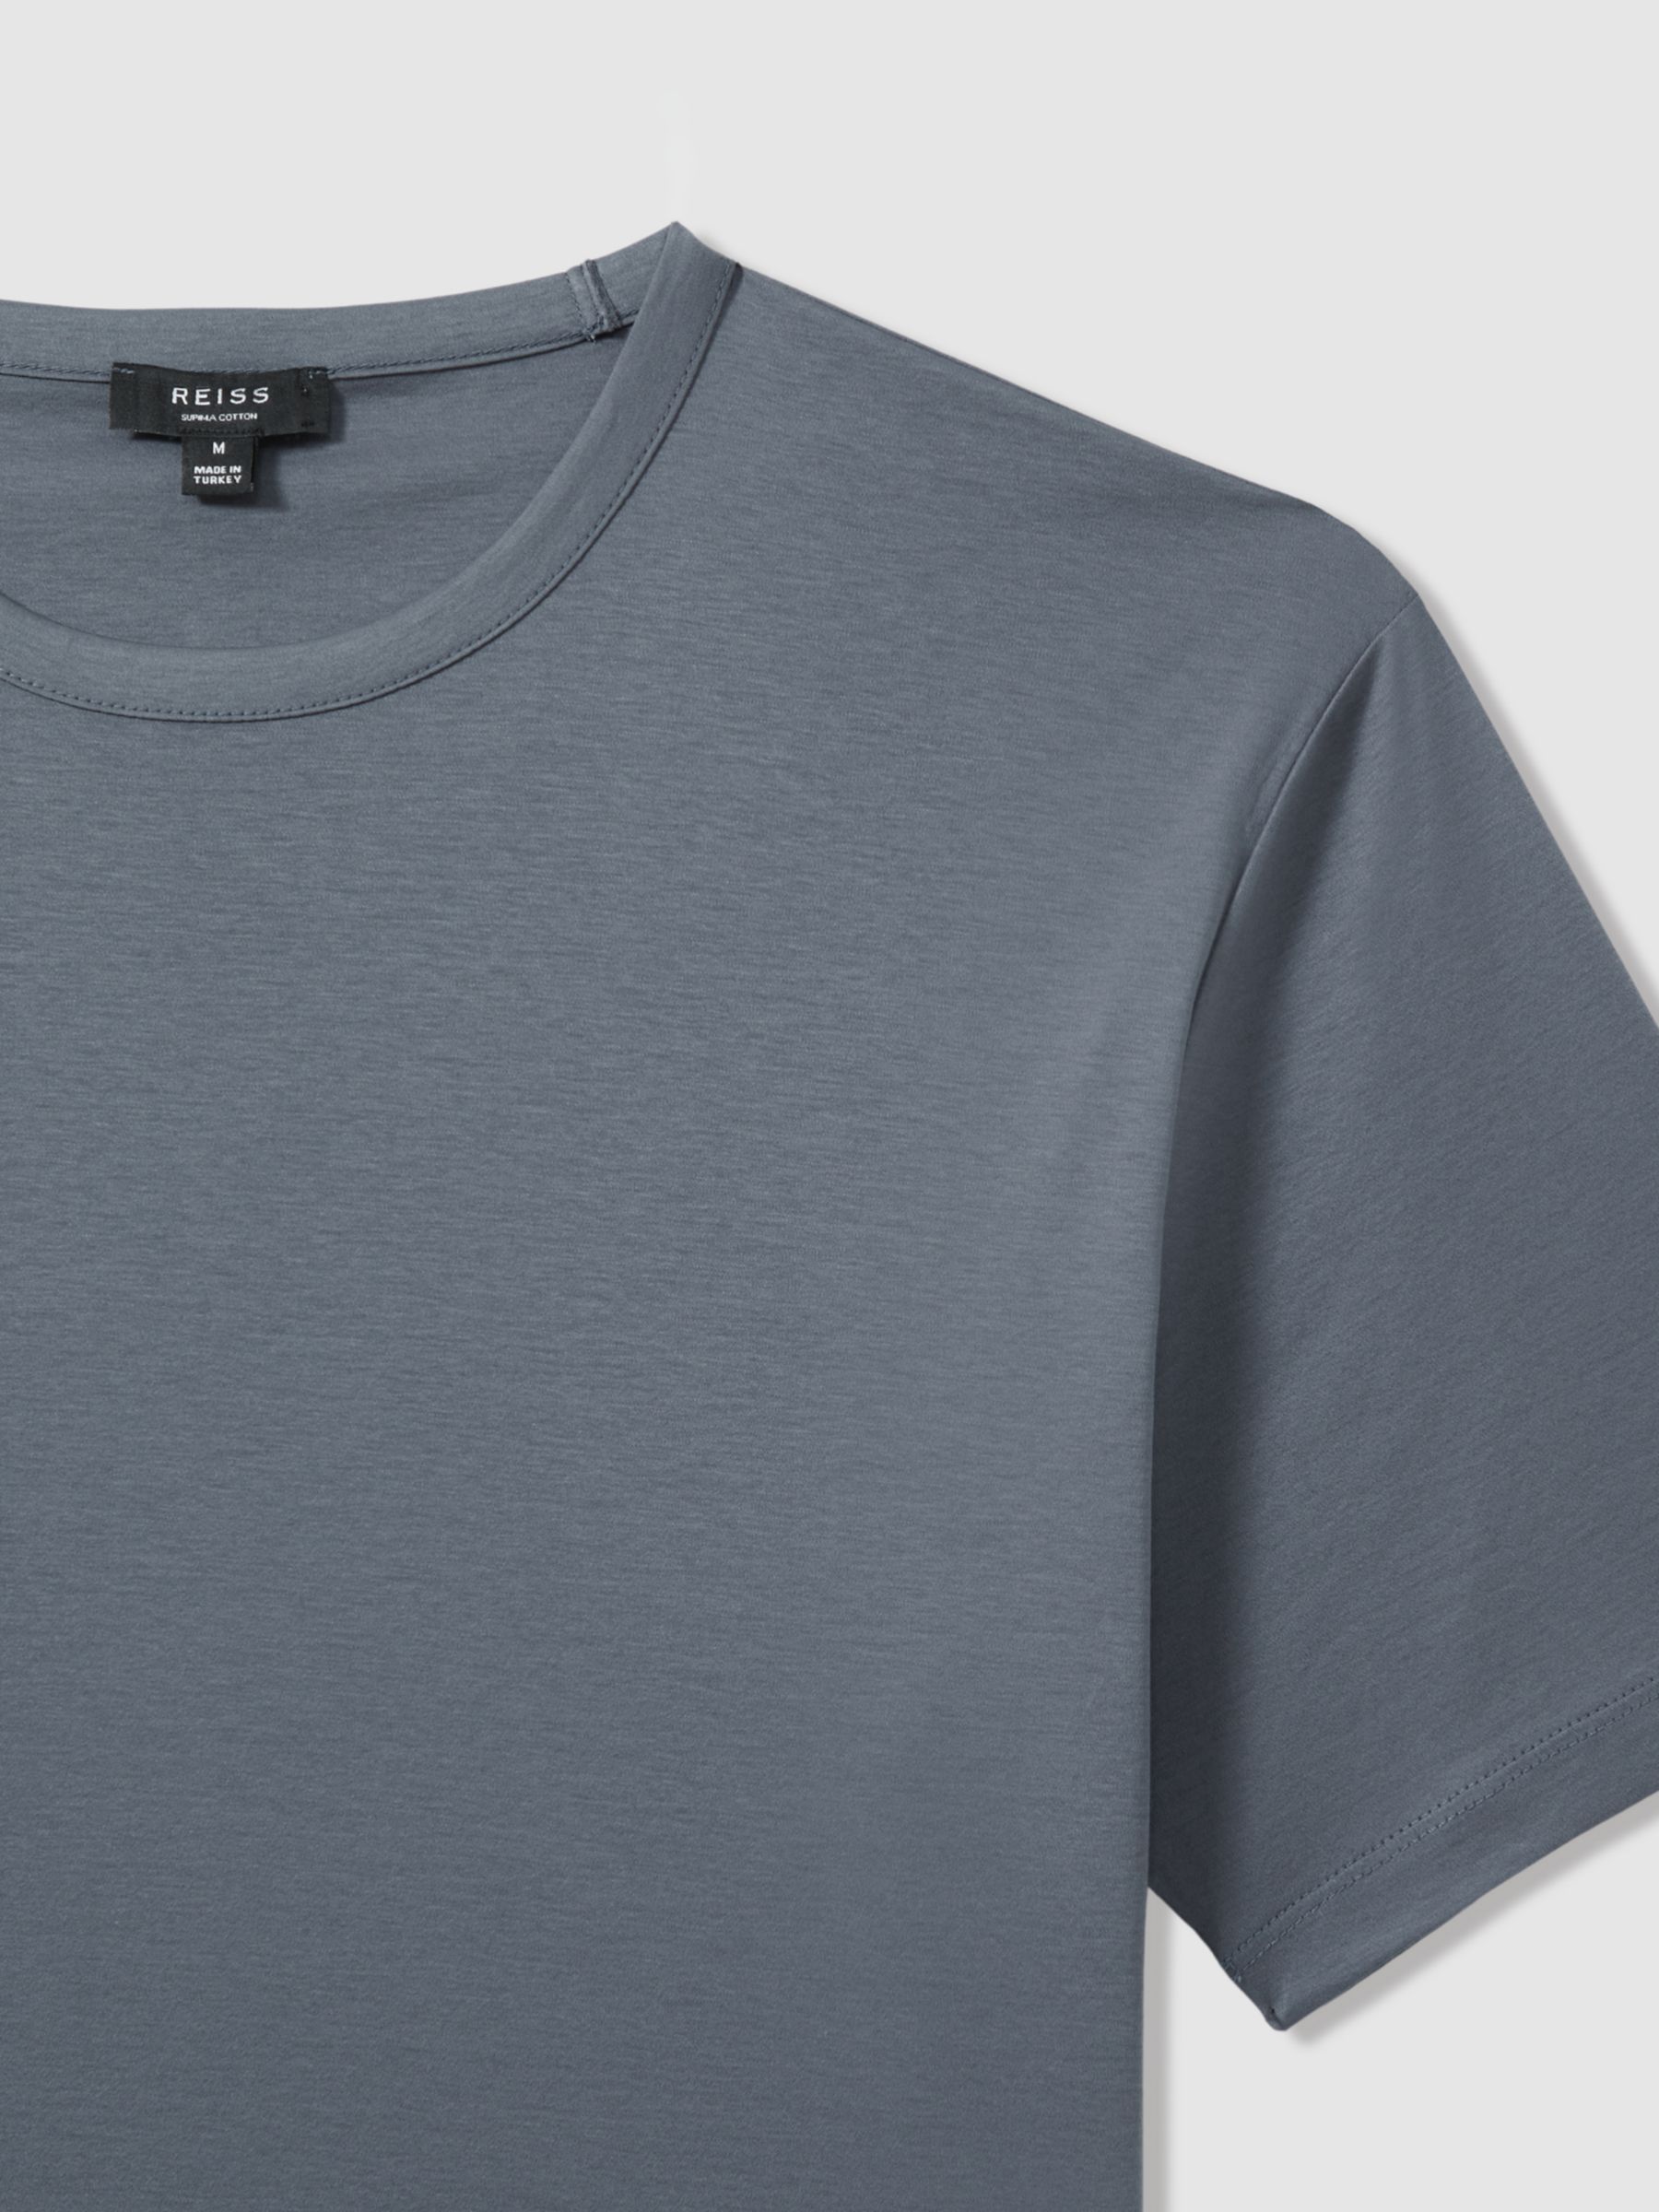 Buy Reiss Capri Regular Fit T-Shirt, Airforce Blue Online at johnlewis.com